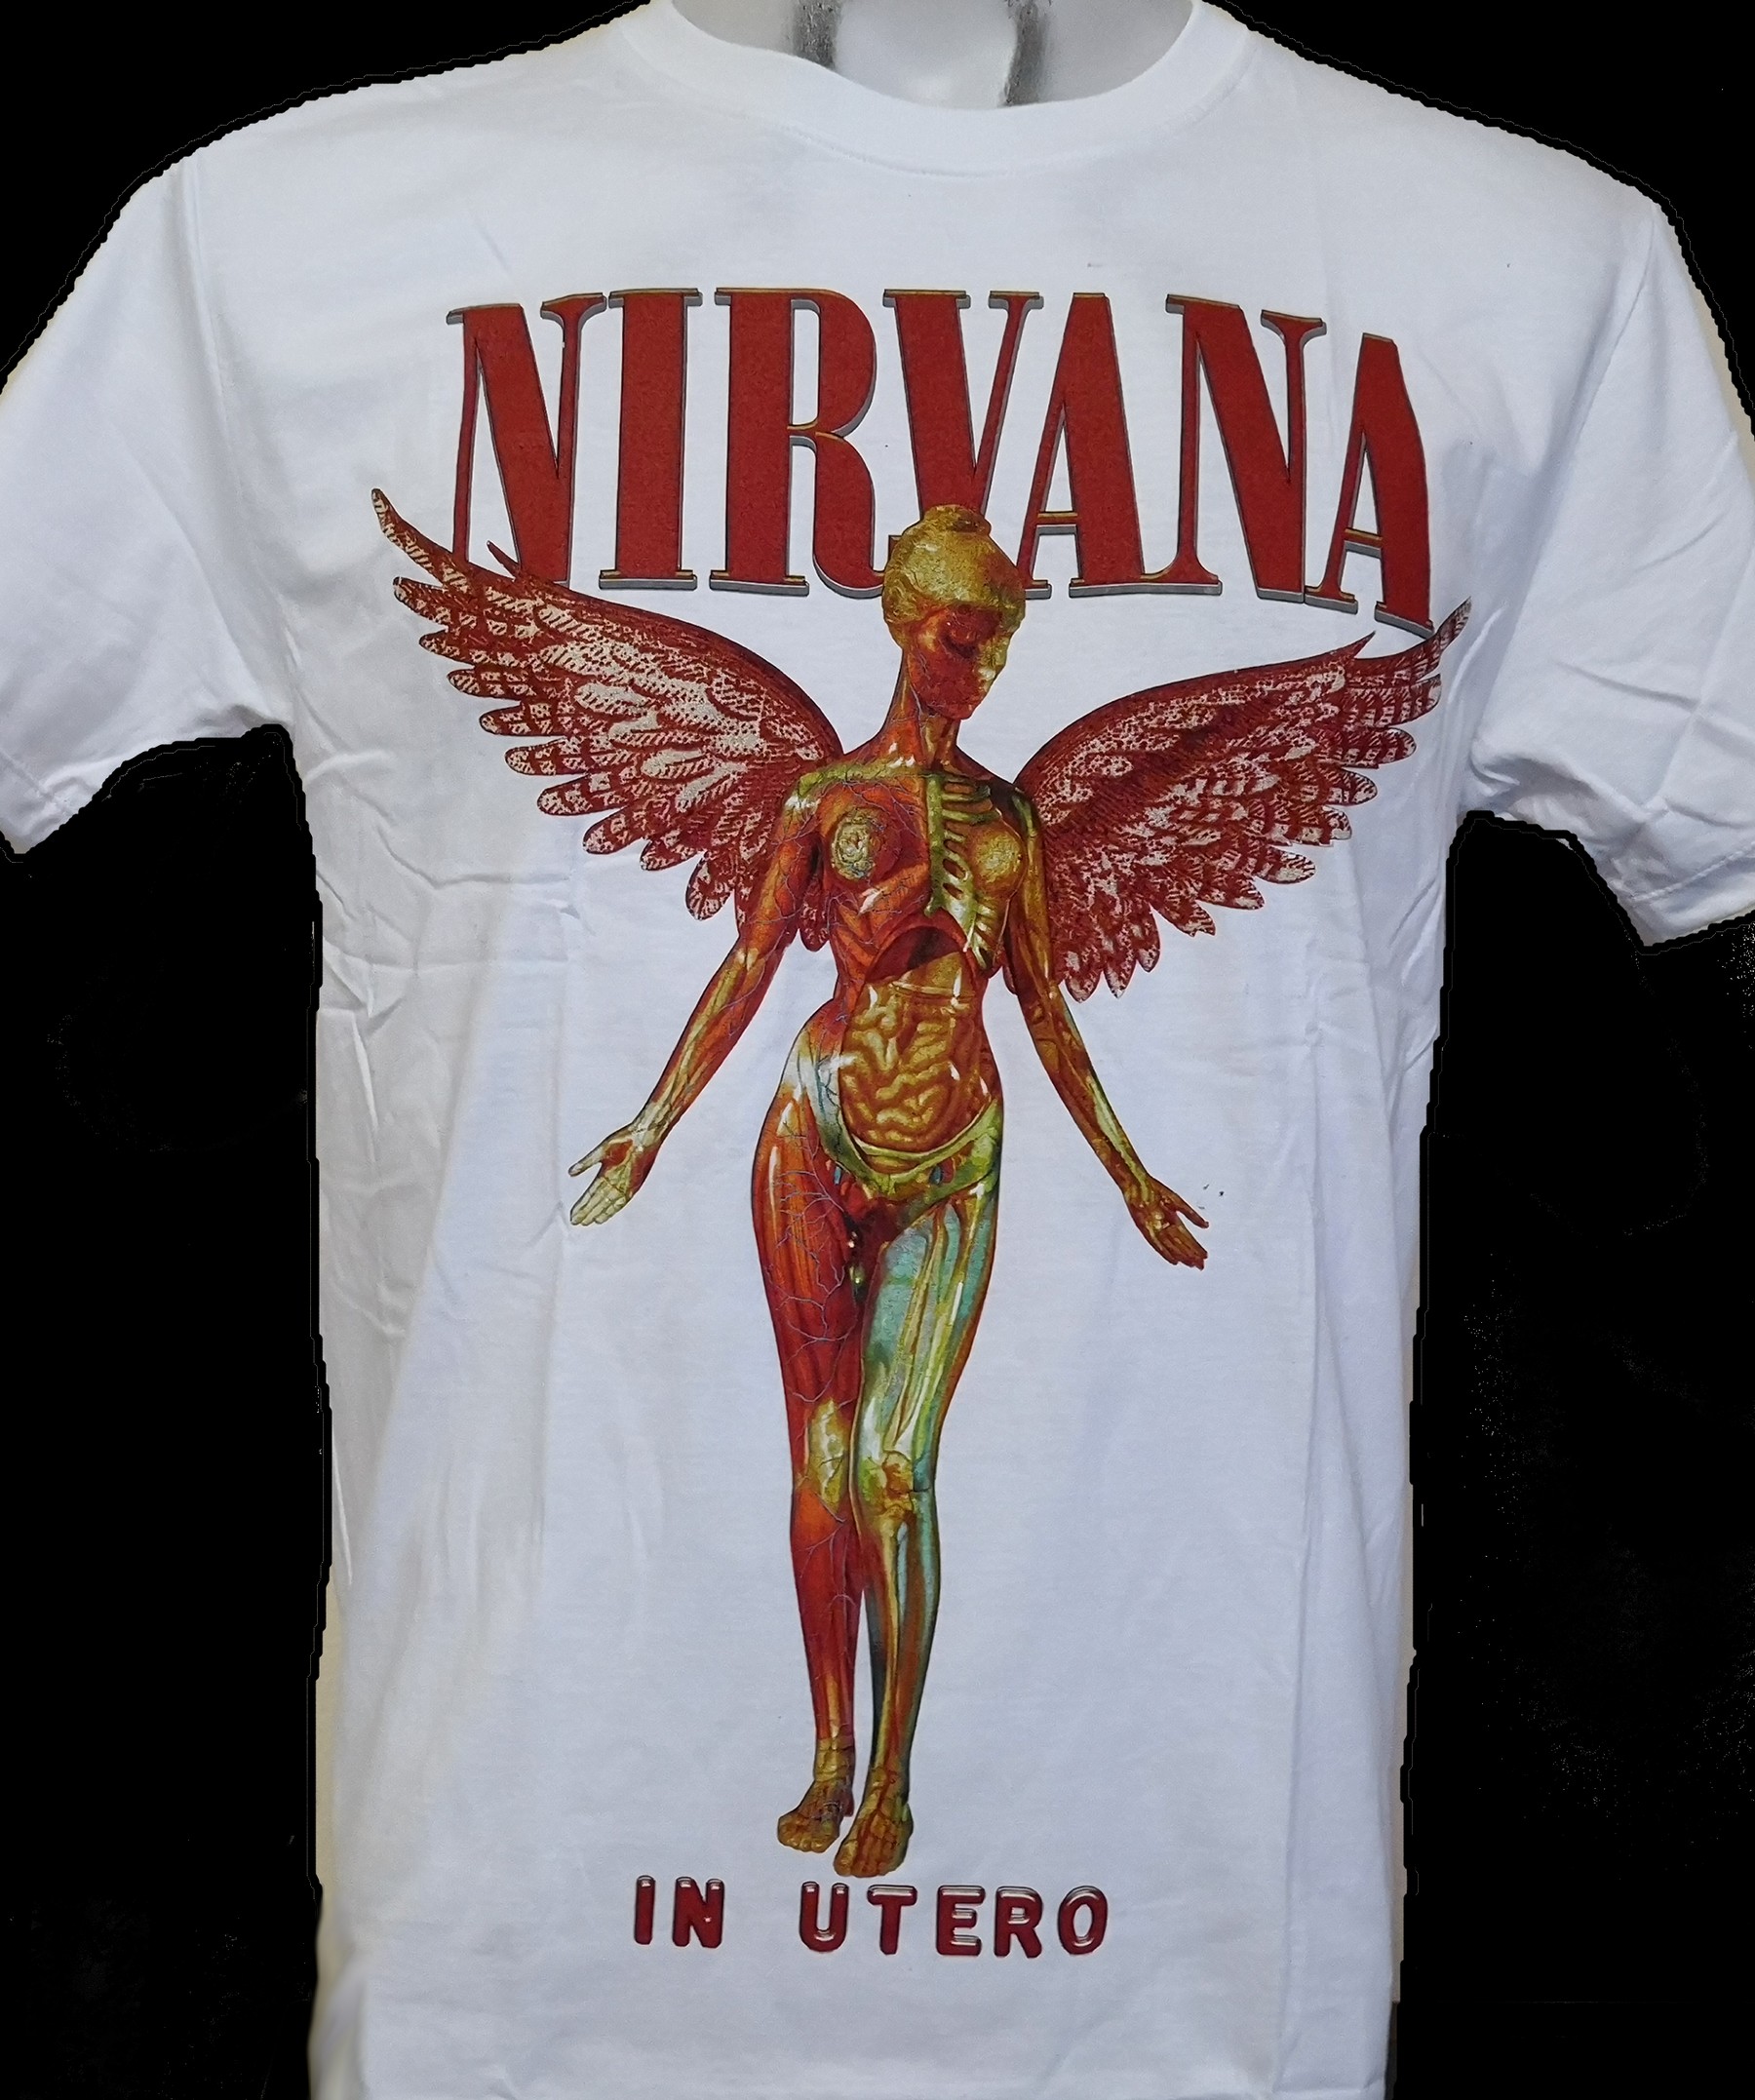 Kleding Unisex kinderkleding Tops & T-shirts T-shirts T-shirts met print Hysterische Glamour X Nirvana omkeerbare tee 